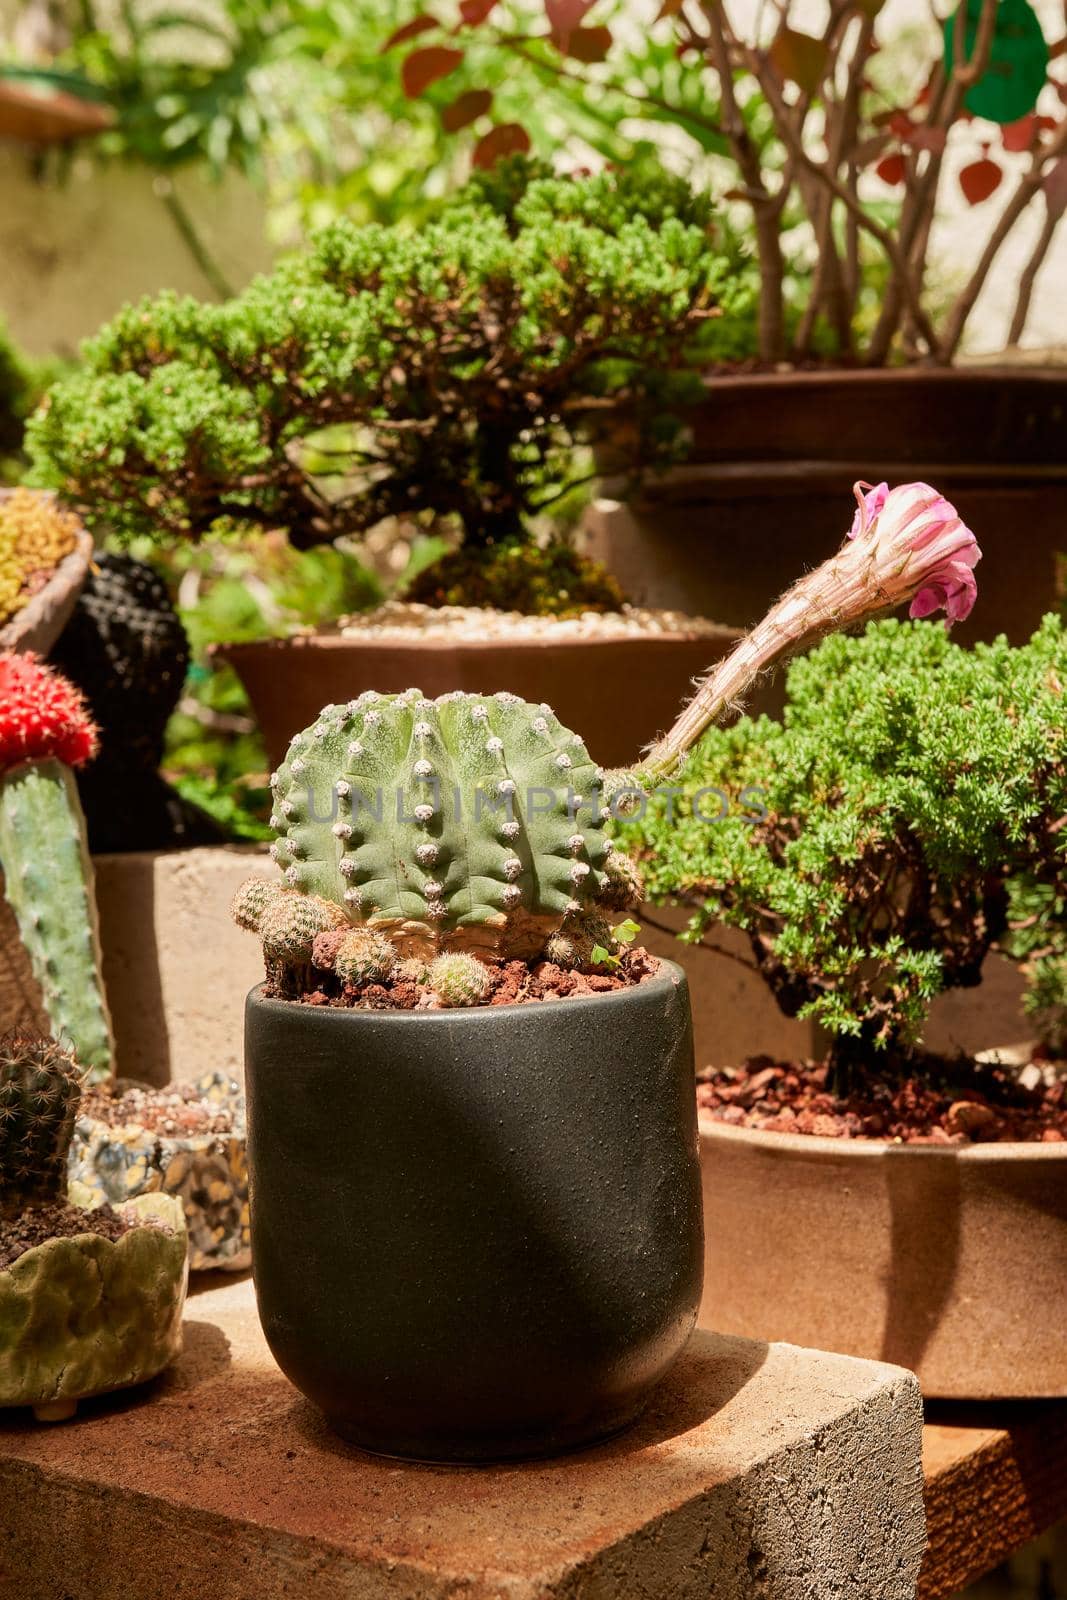 Small cactus in botanical garden by JpRamos